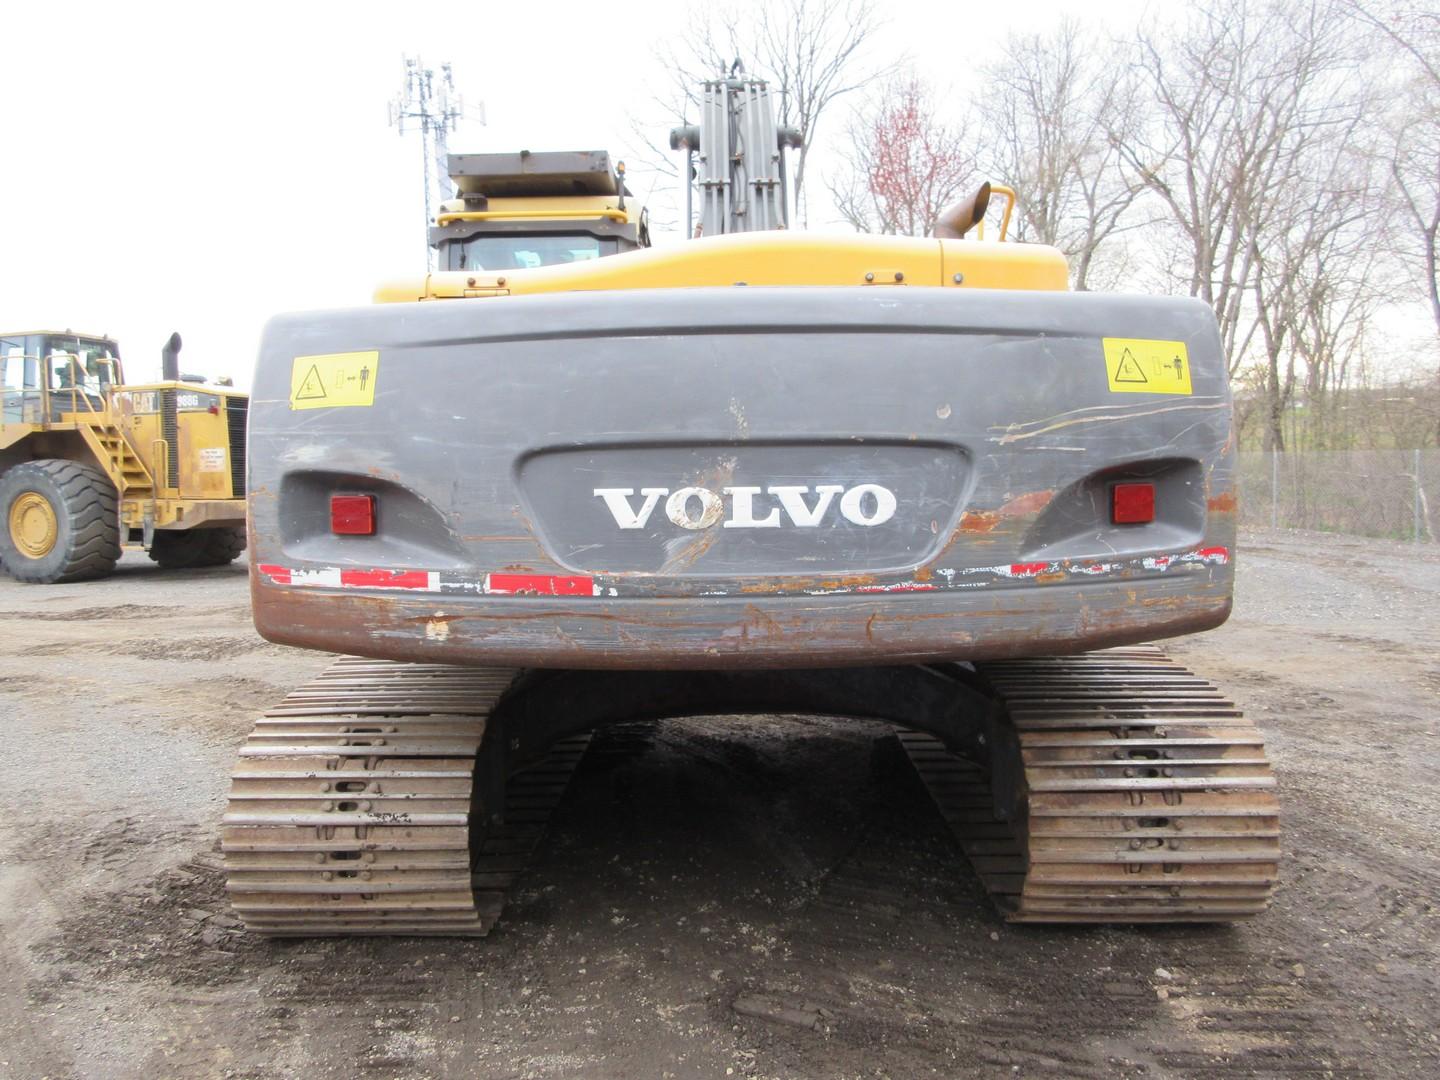 2008 Volvo EC240CL Hydraulic Excavator